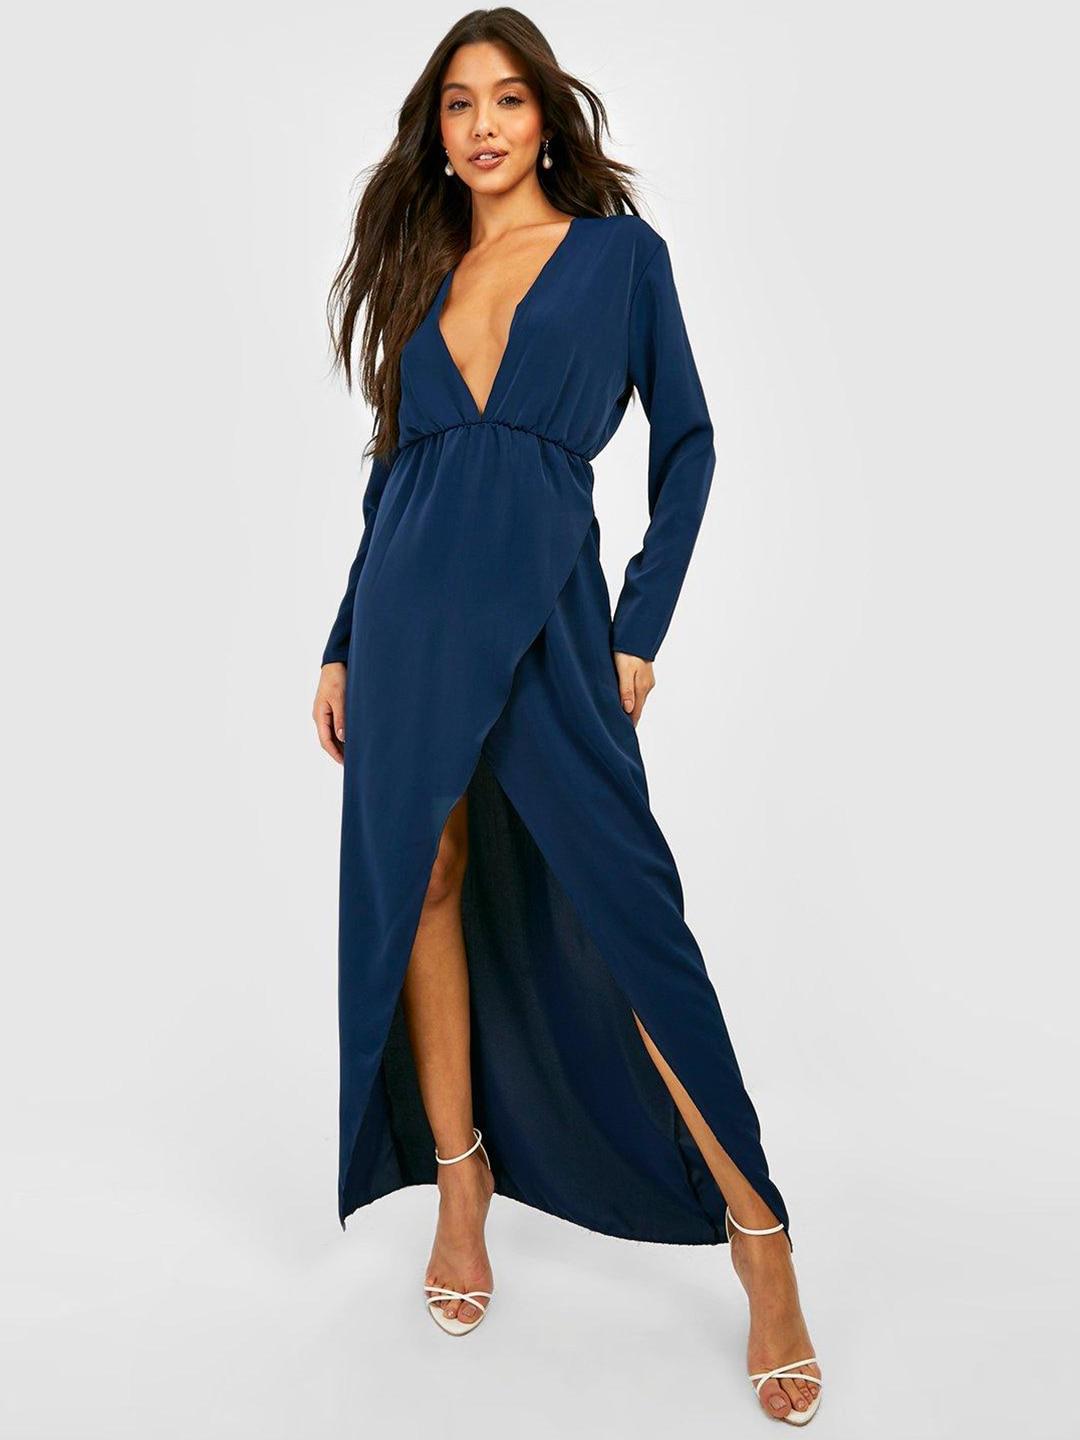 boohoo-teal-blue-wrap-long-sleeve-maxi-dress